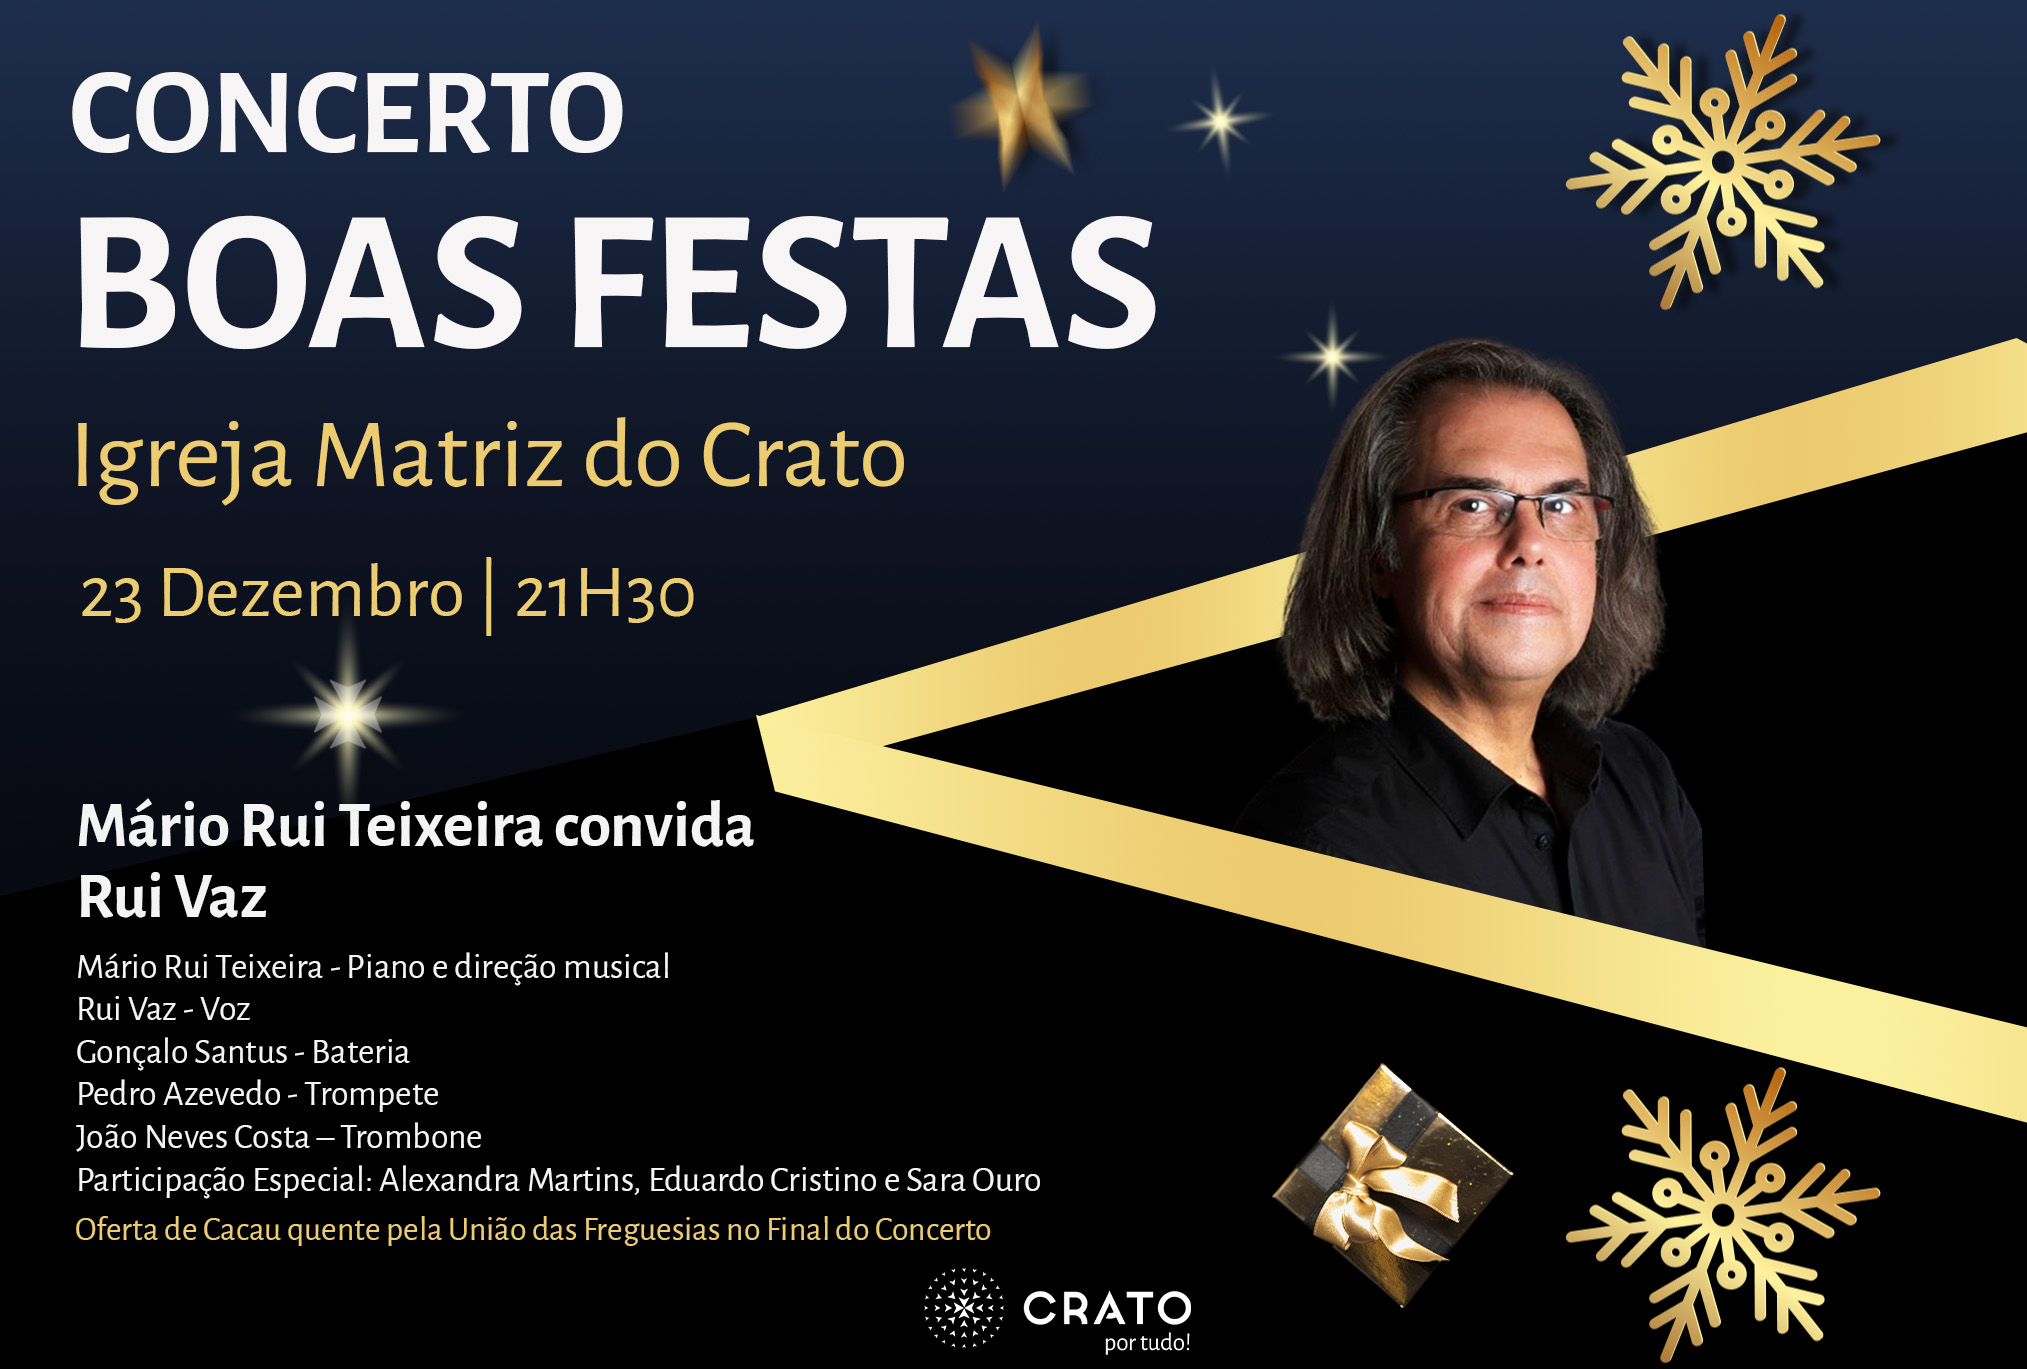 Concerto de Boas Festas – Mário Rui Teixeira convida Rui Vaz